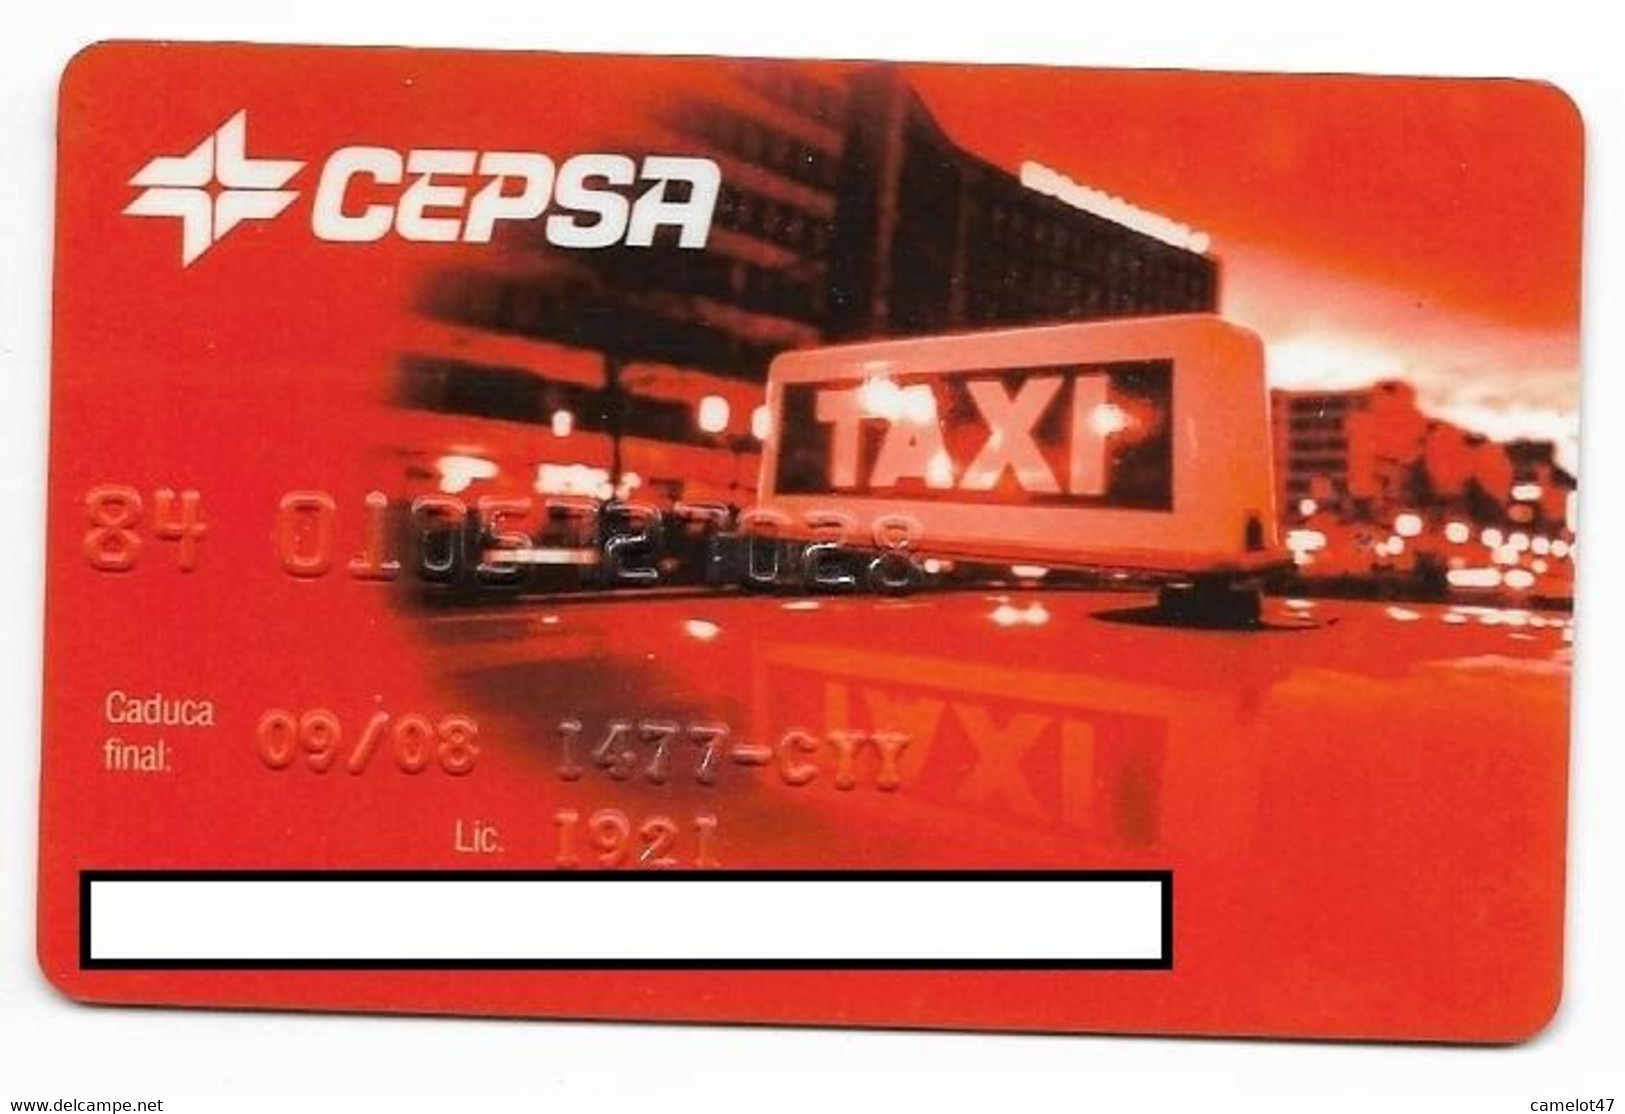 Cepsa Spain, Gas Stations Rewards Magnetic Card, # Cepsa-3  NOT A PHONE CARD - Petrolio